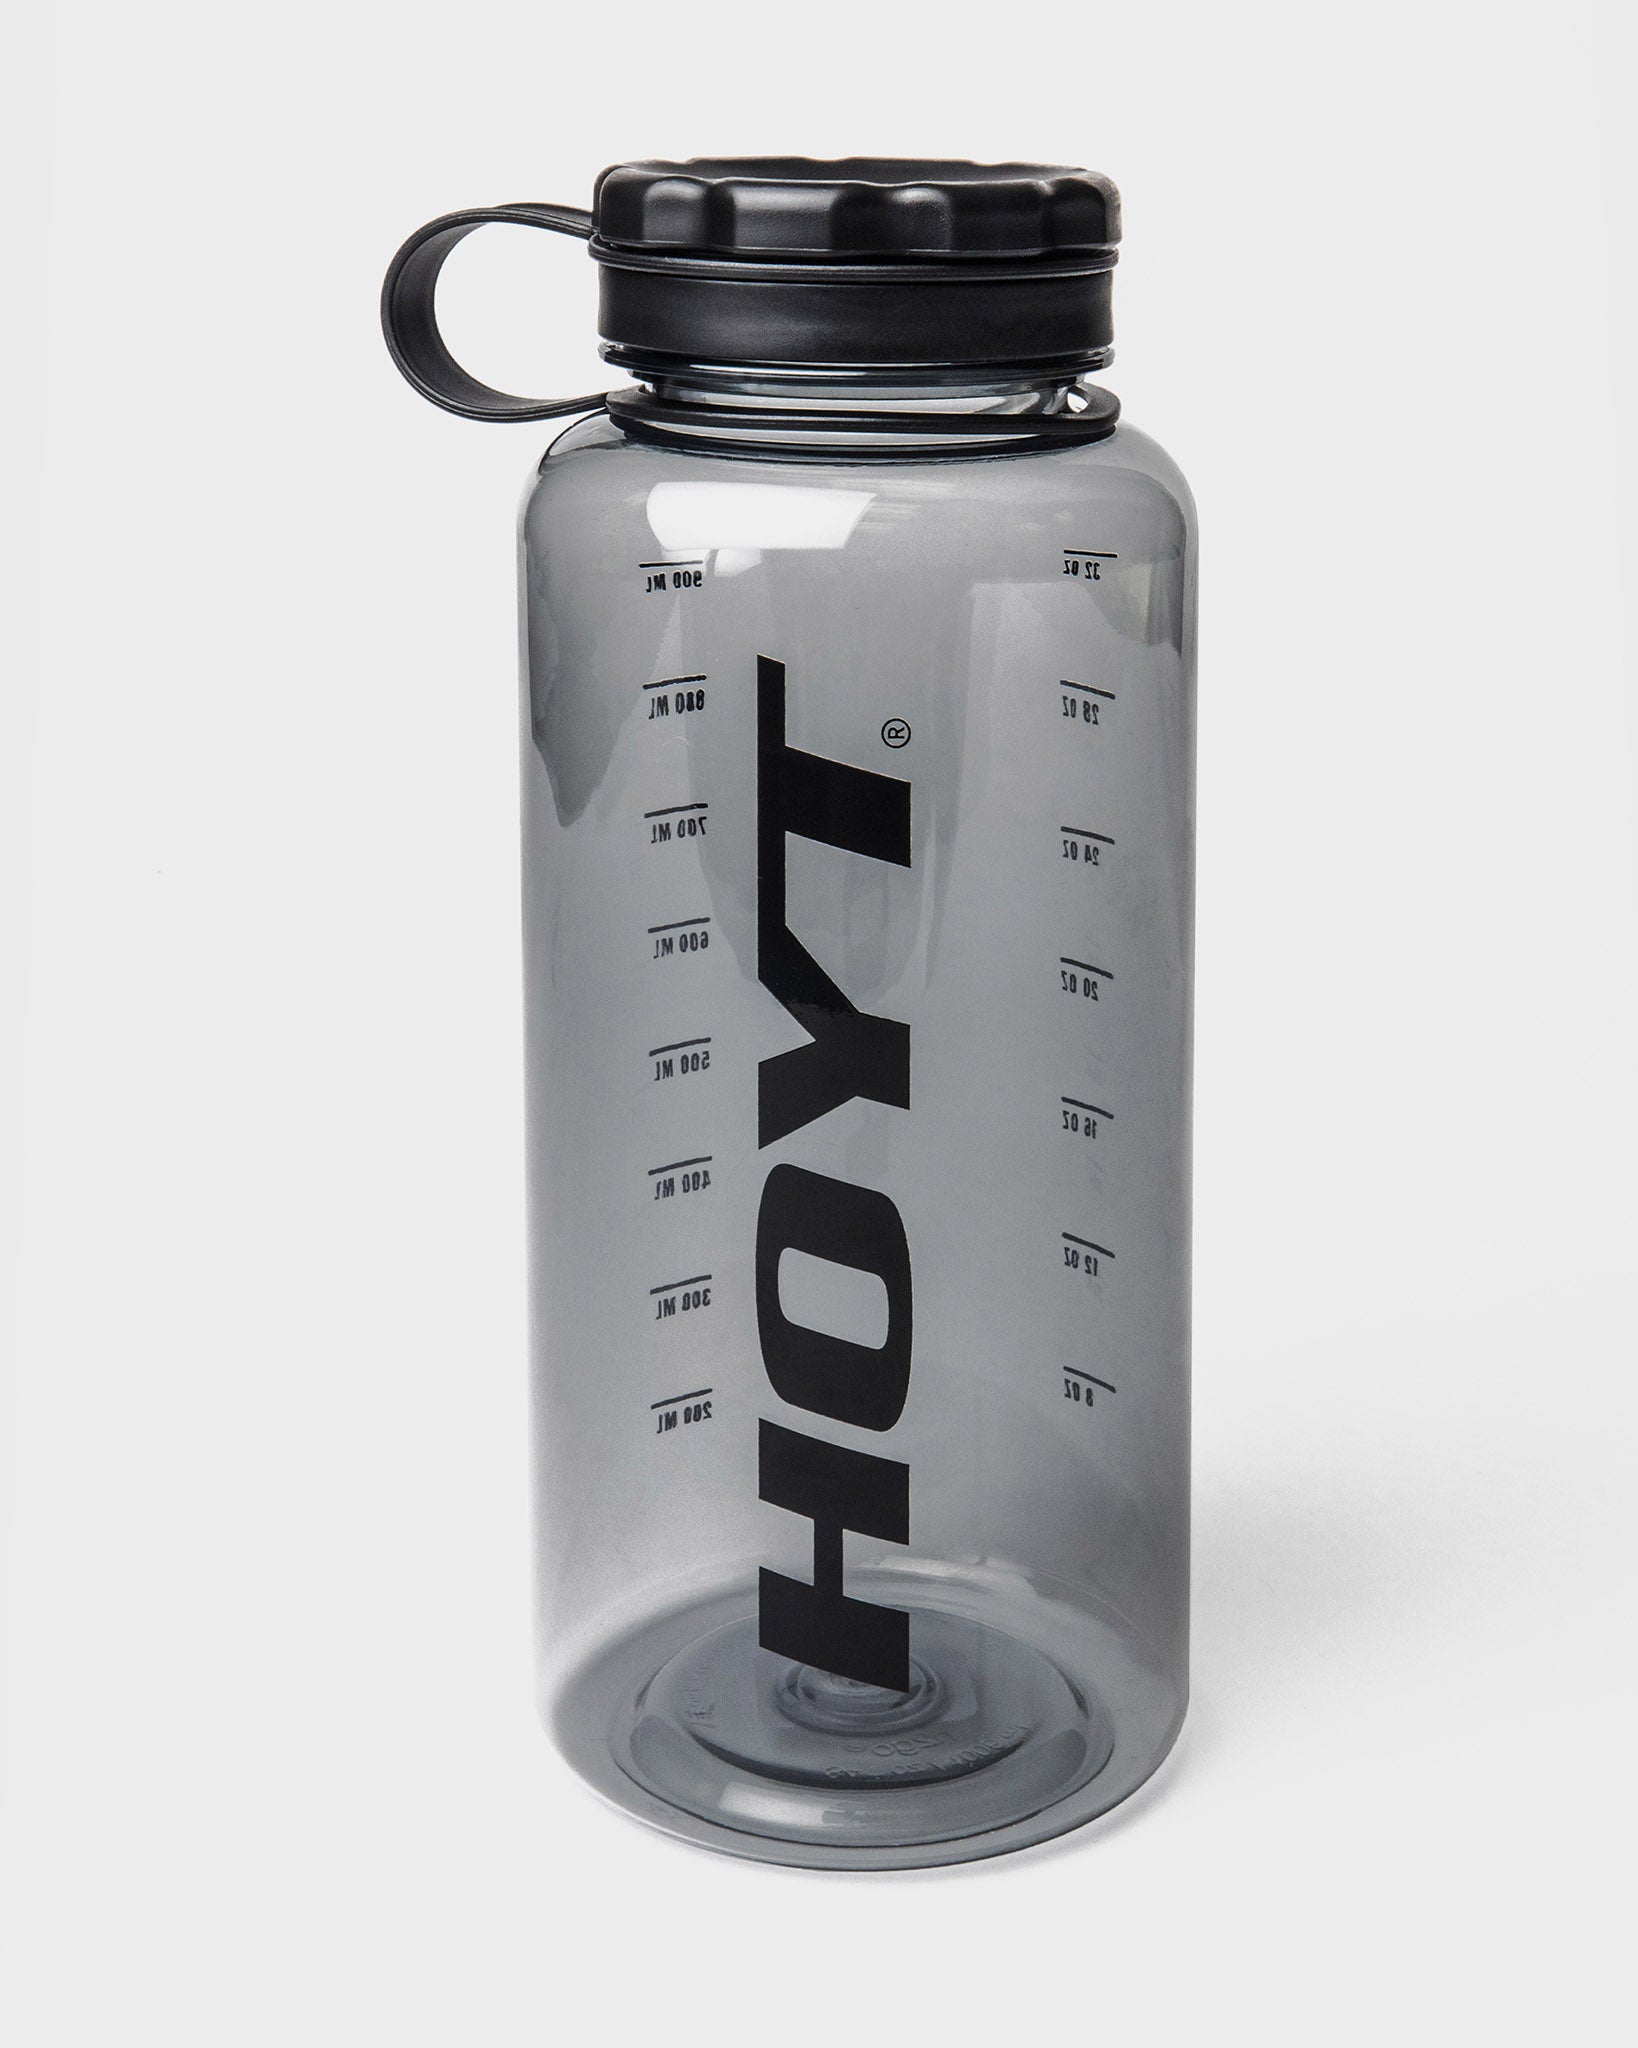 Hoyt Rainmaker 34 oz. water bottle